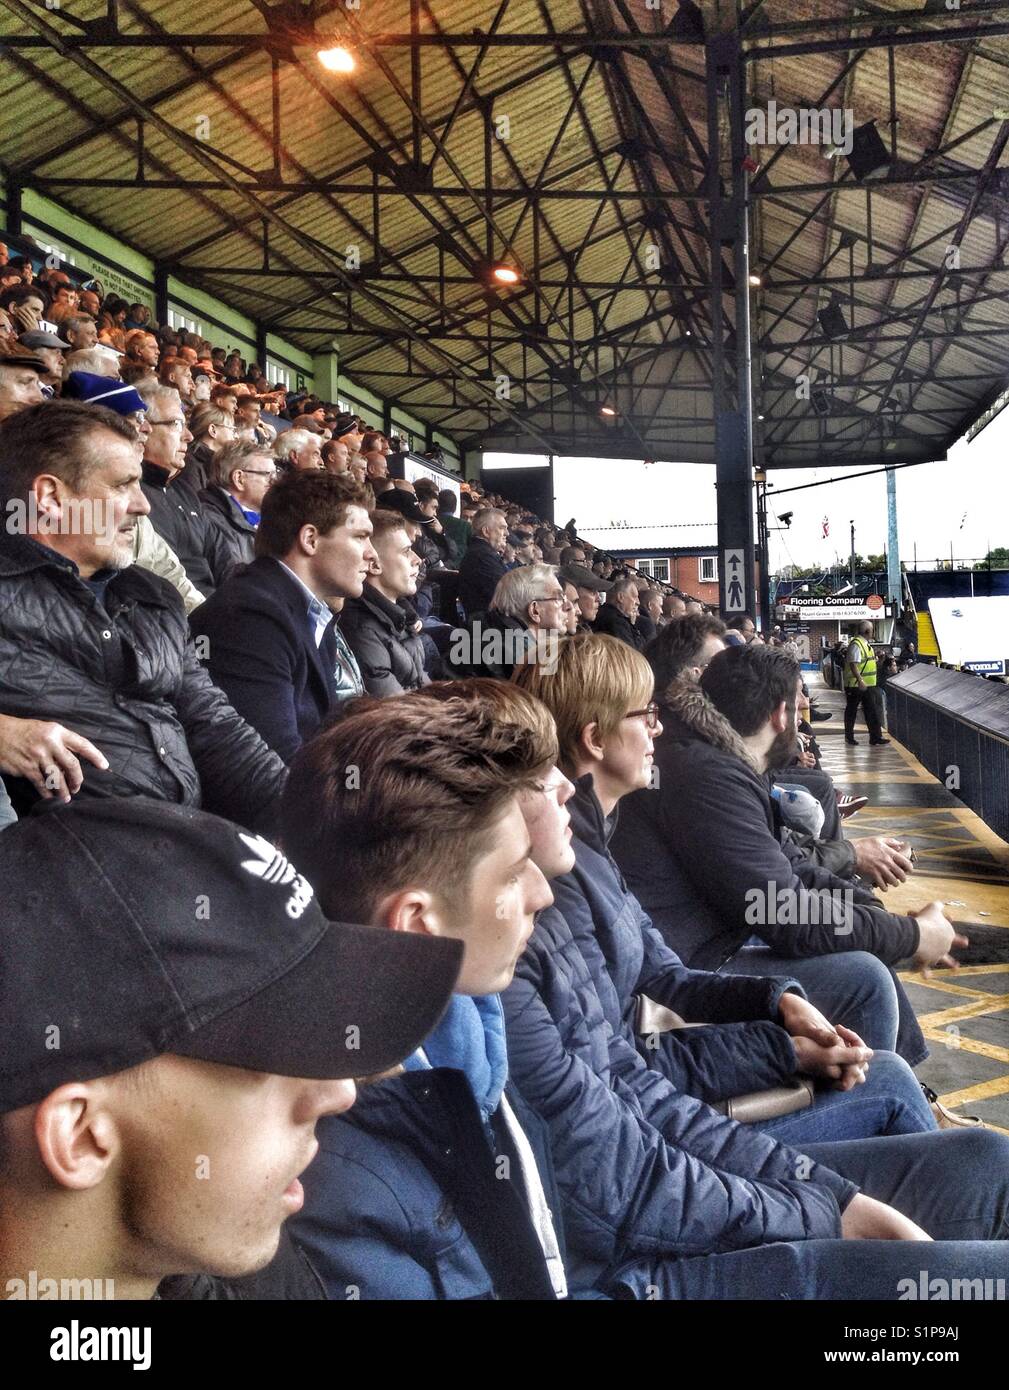 Stockport county football crowd Stock Photo